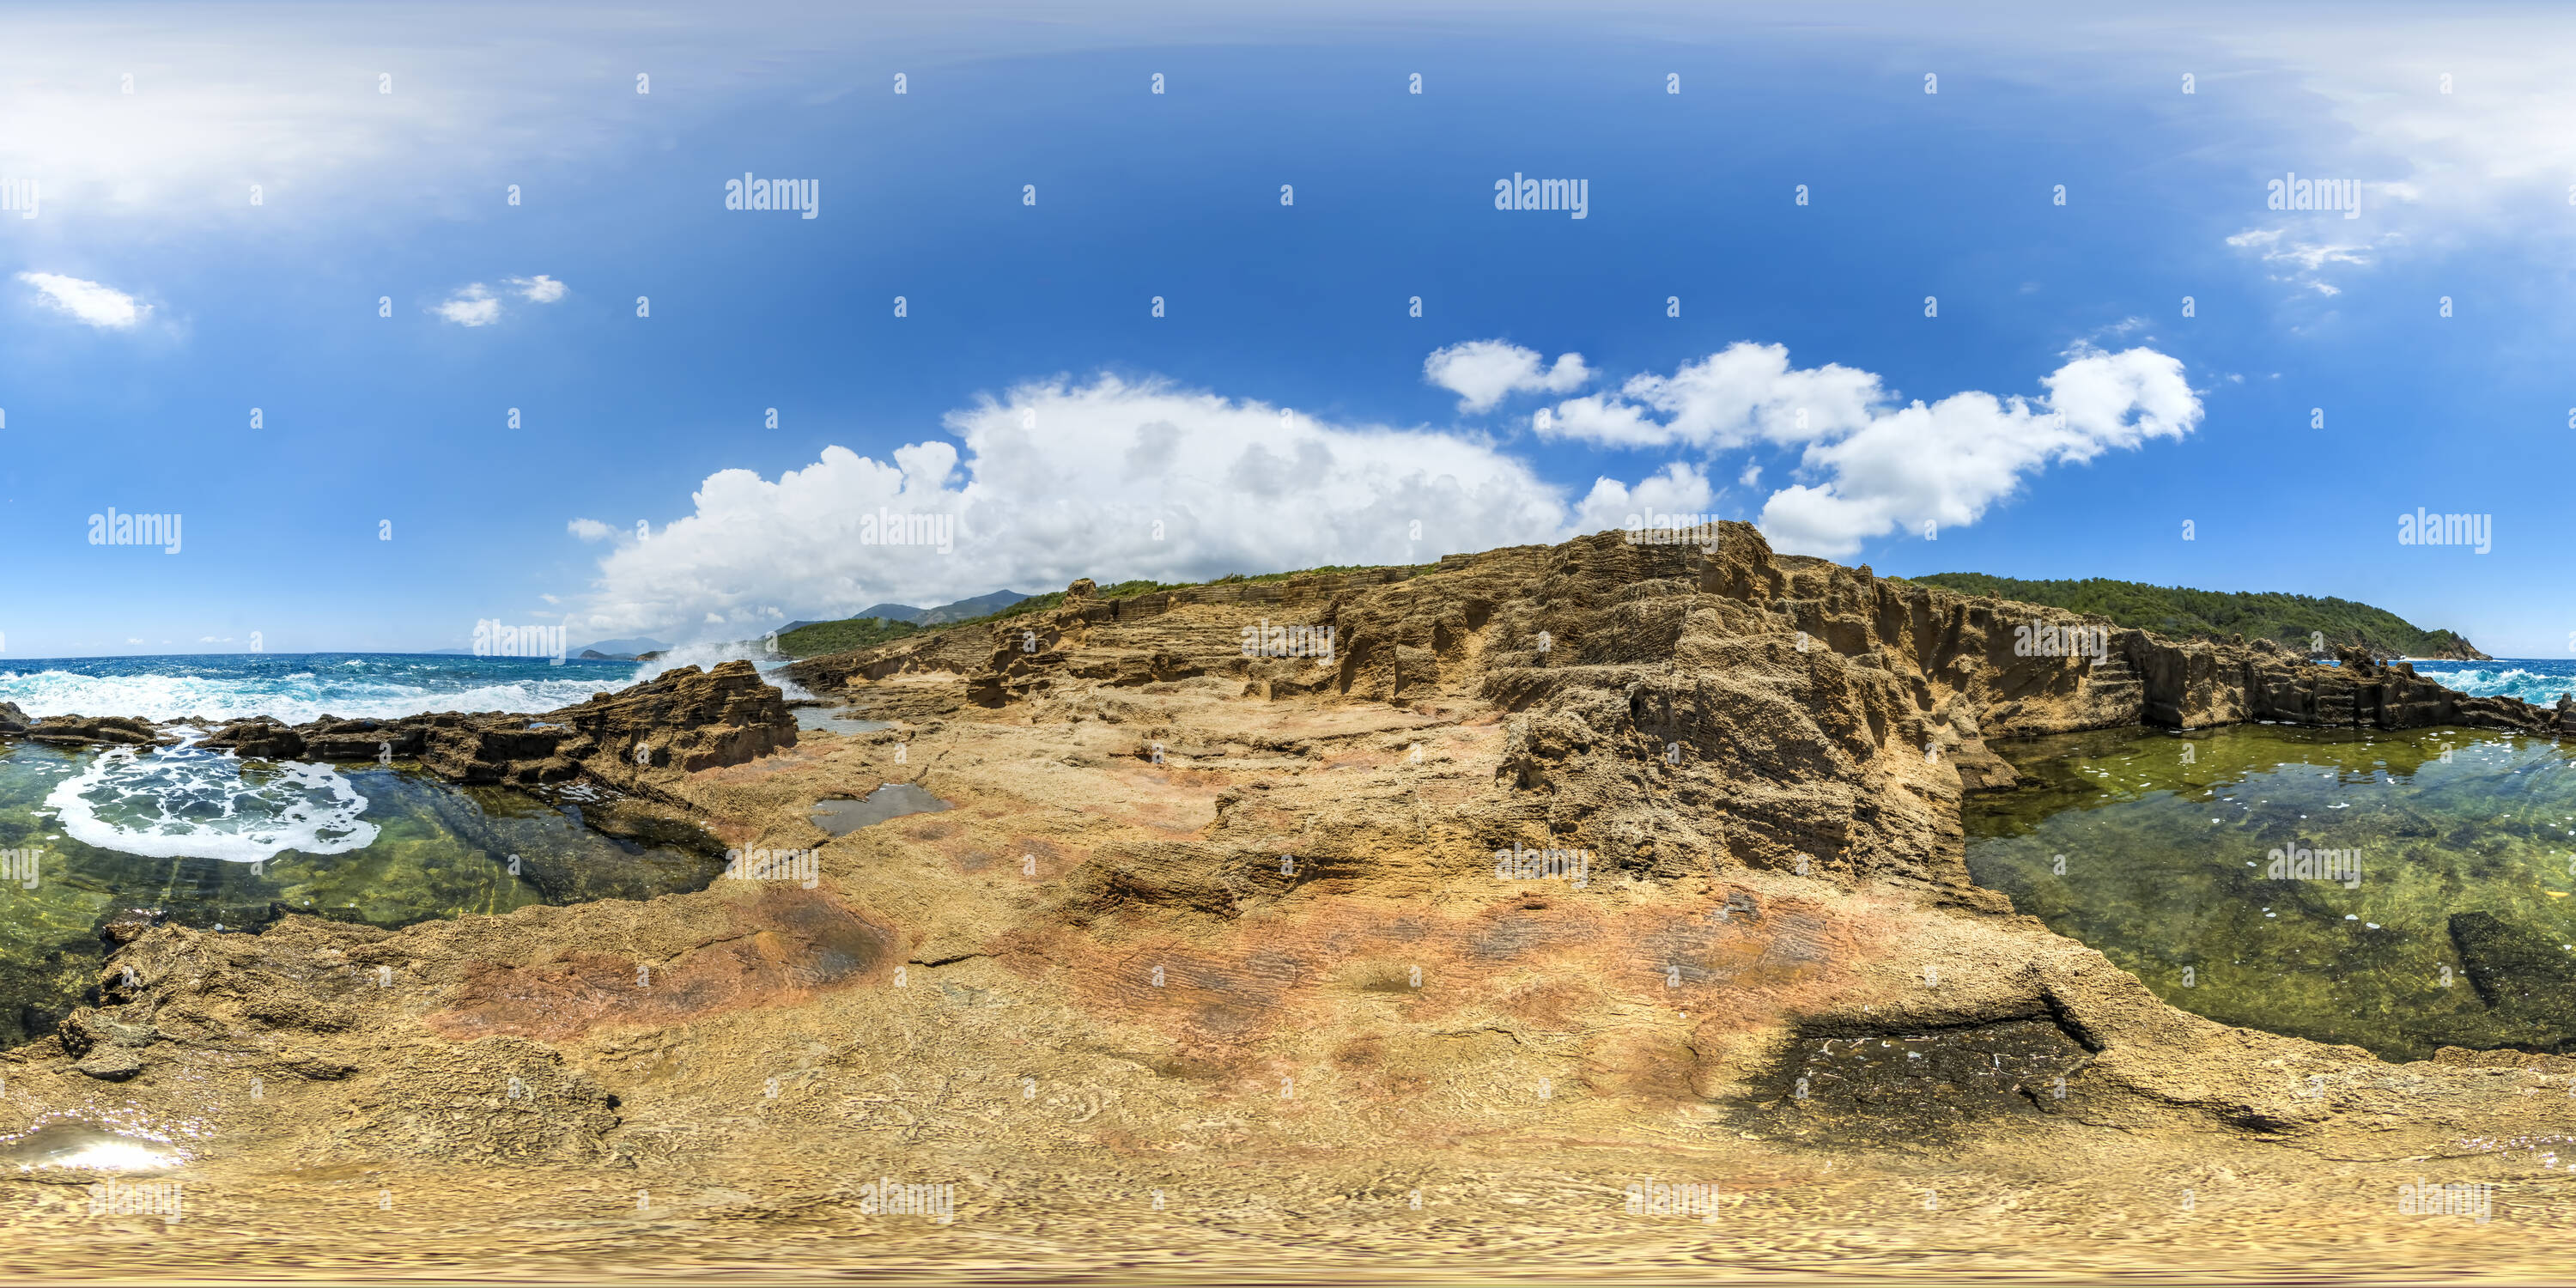 360 degree panoramic view of Melenia Bozyazi Vr Mersin 64c